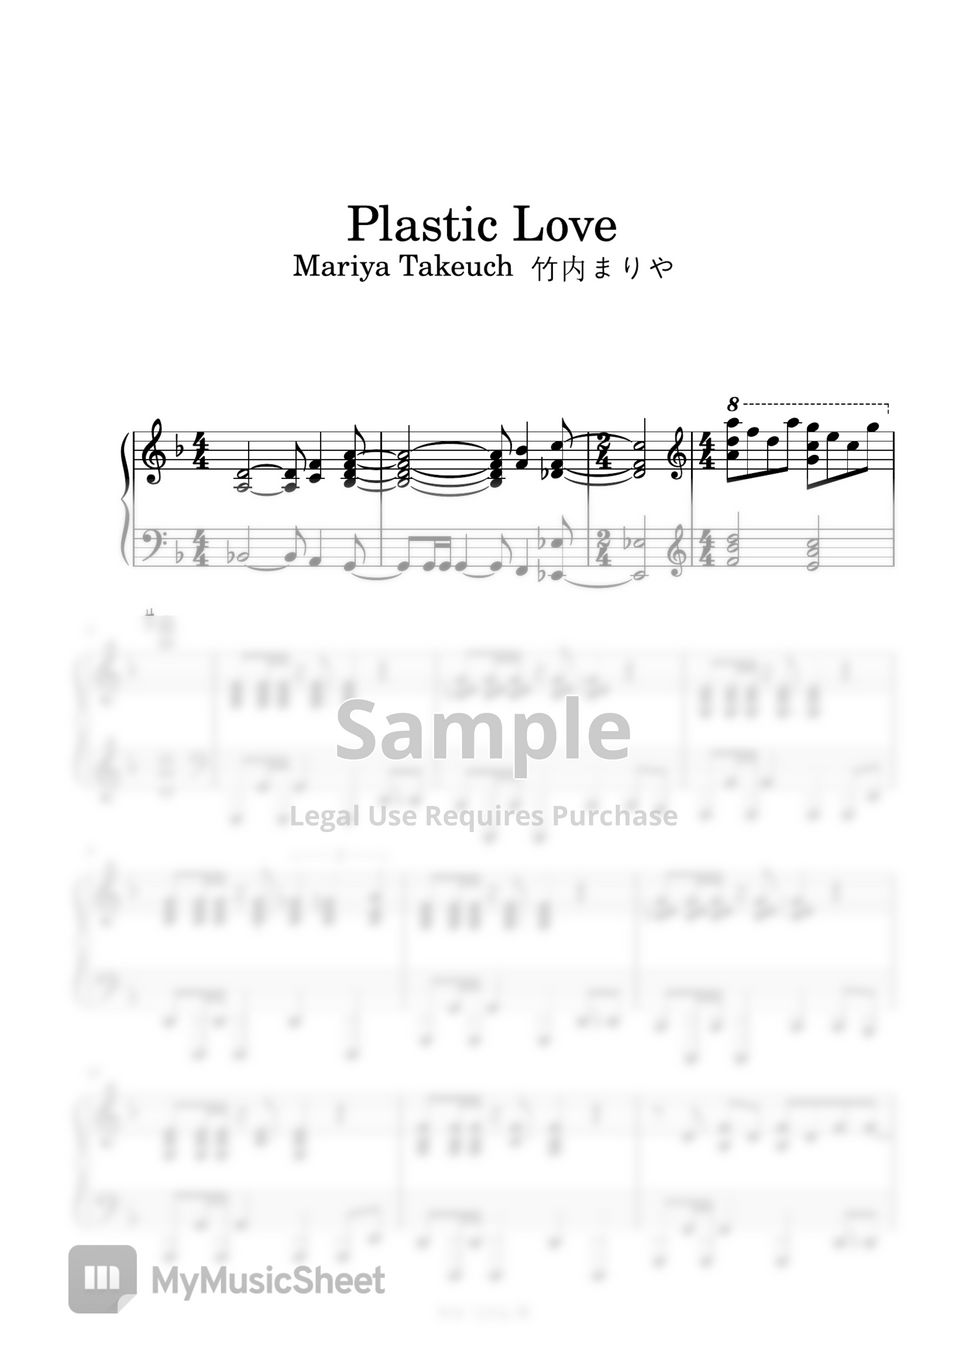 takeuchi mariya - plastic love (왼손 패턴 반복) by 악보 그리는 D